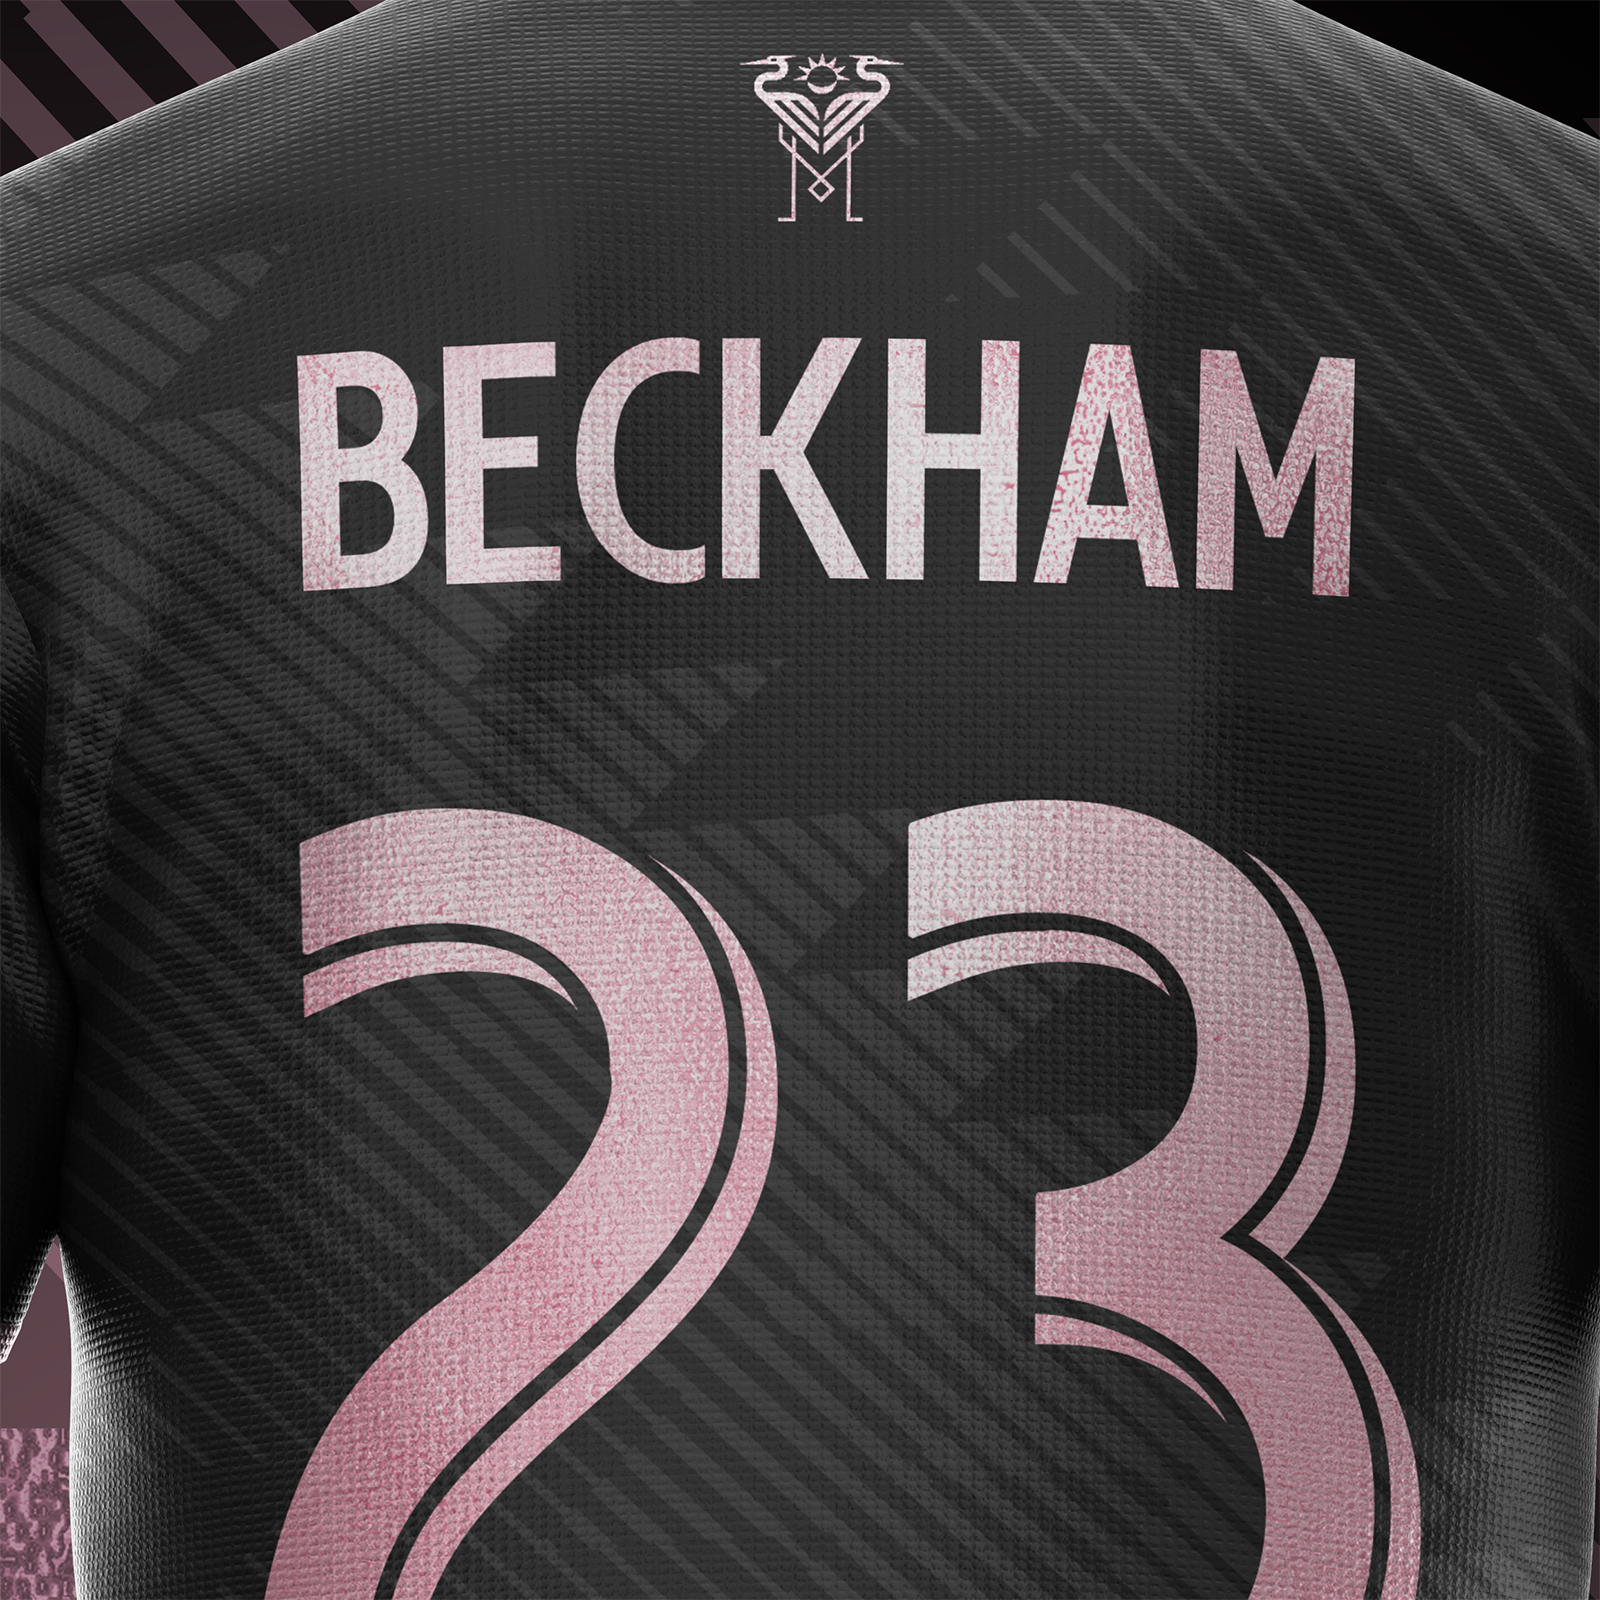 beckham inter miami jersey